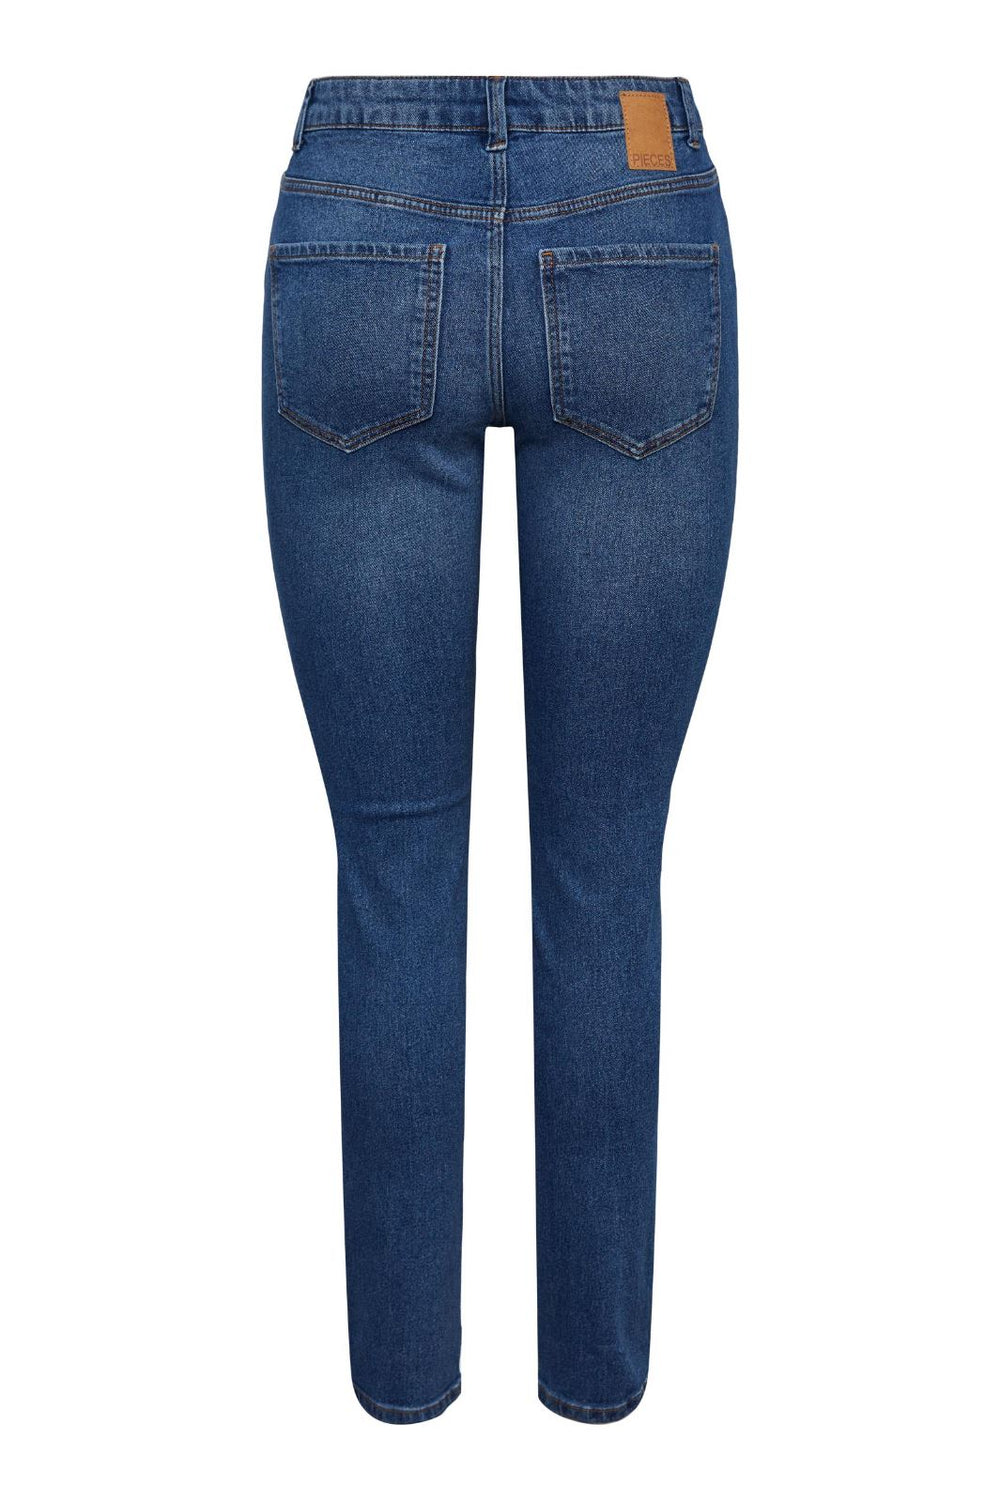 Pieces - Pcnunna Slim - 4291507 Medium Blue Denim Jeans 